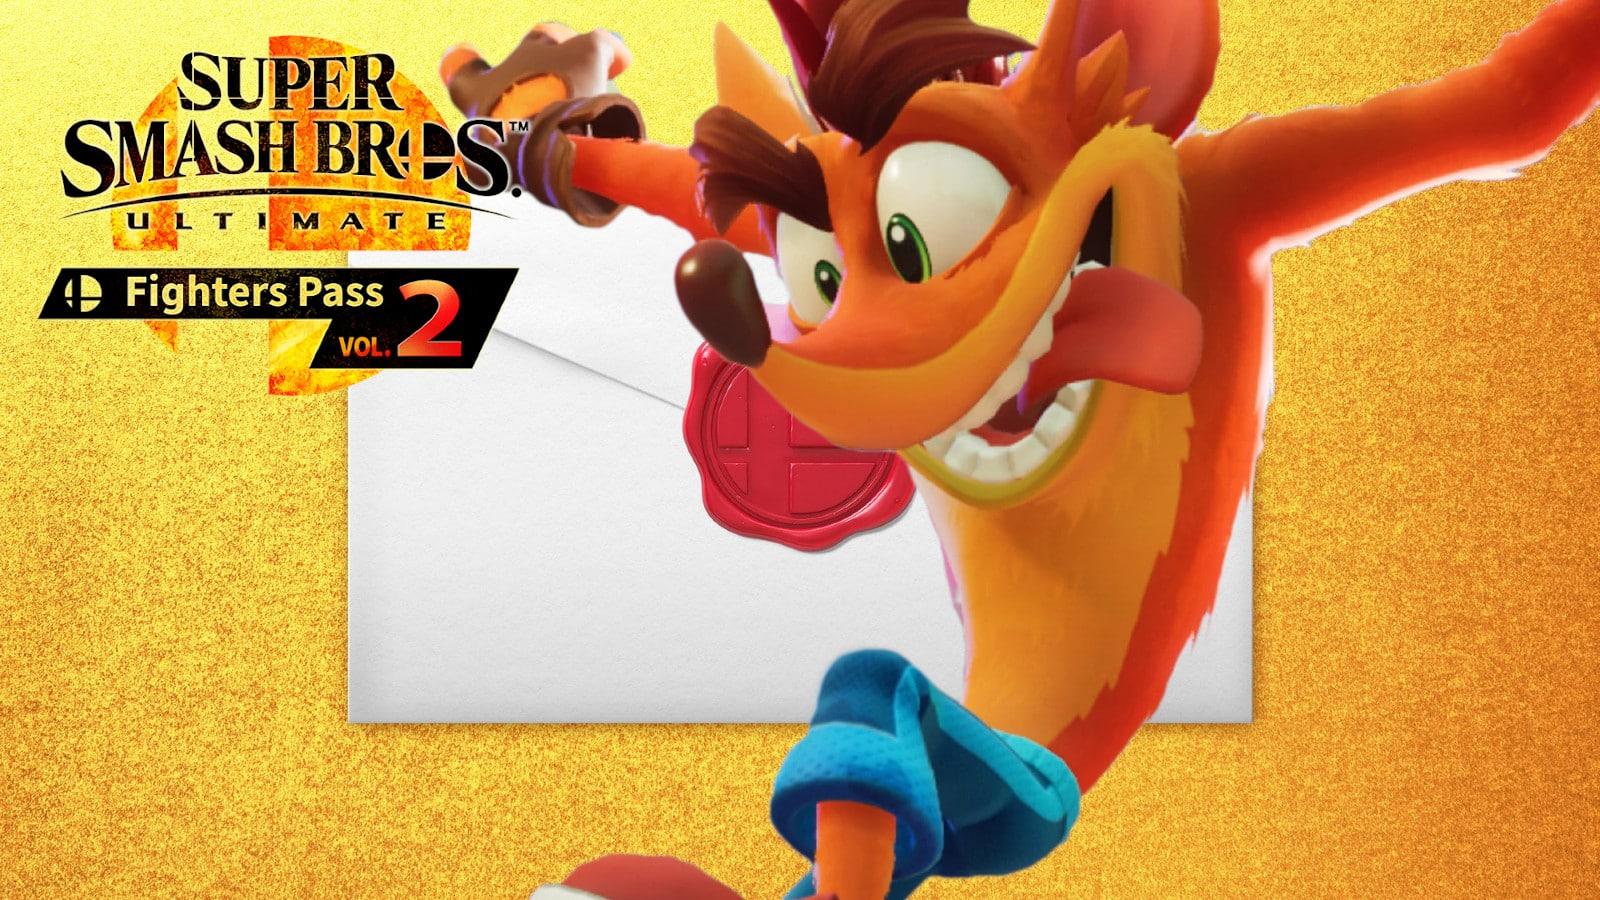 Rumor: Super Smash Bros. Ultimate Adding Crash Bandicoot Next Year